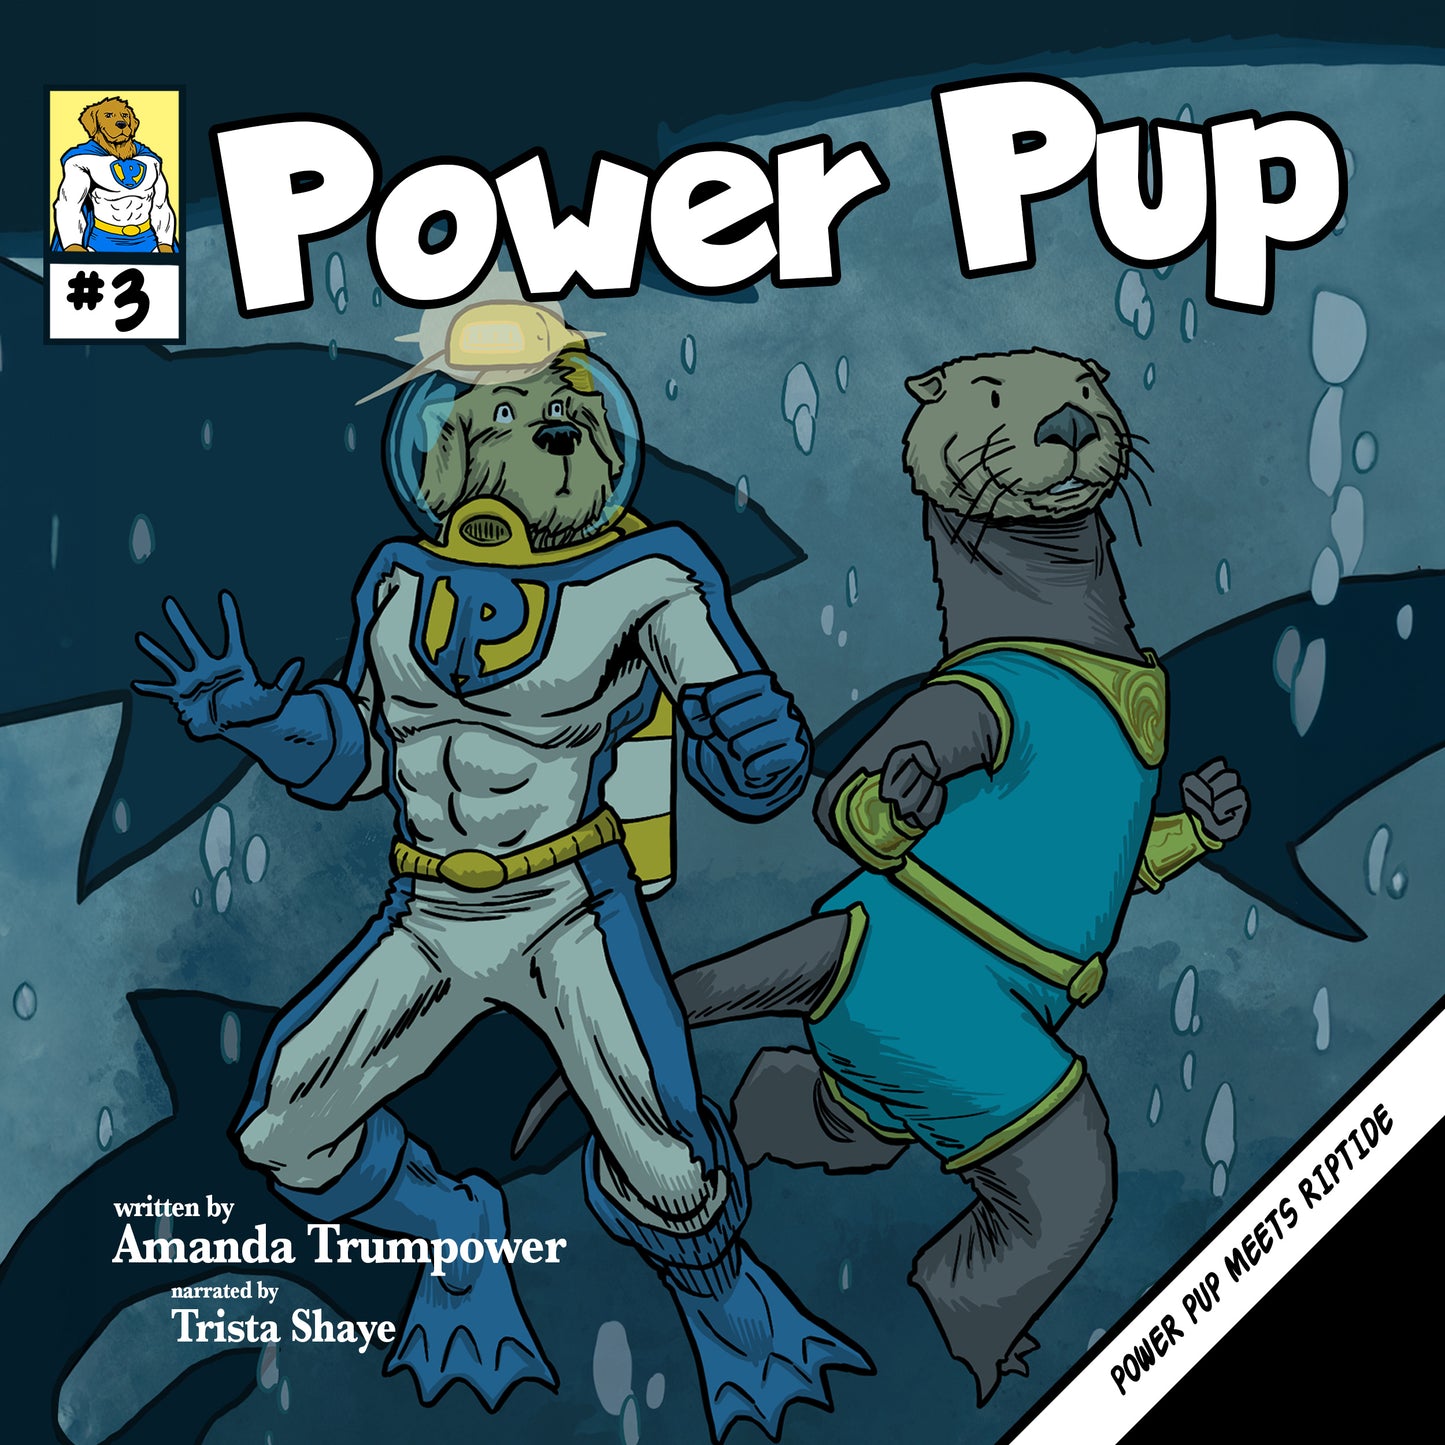 Power Pup #3: Power Pup Meets Riptide